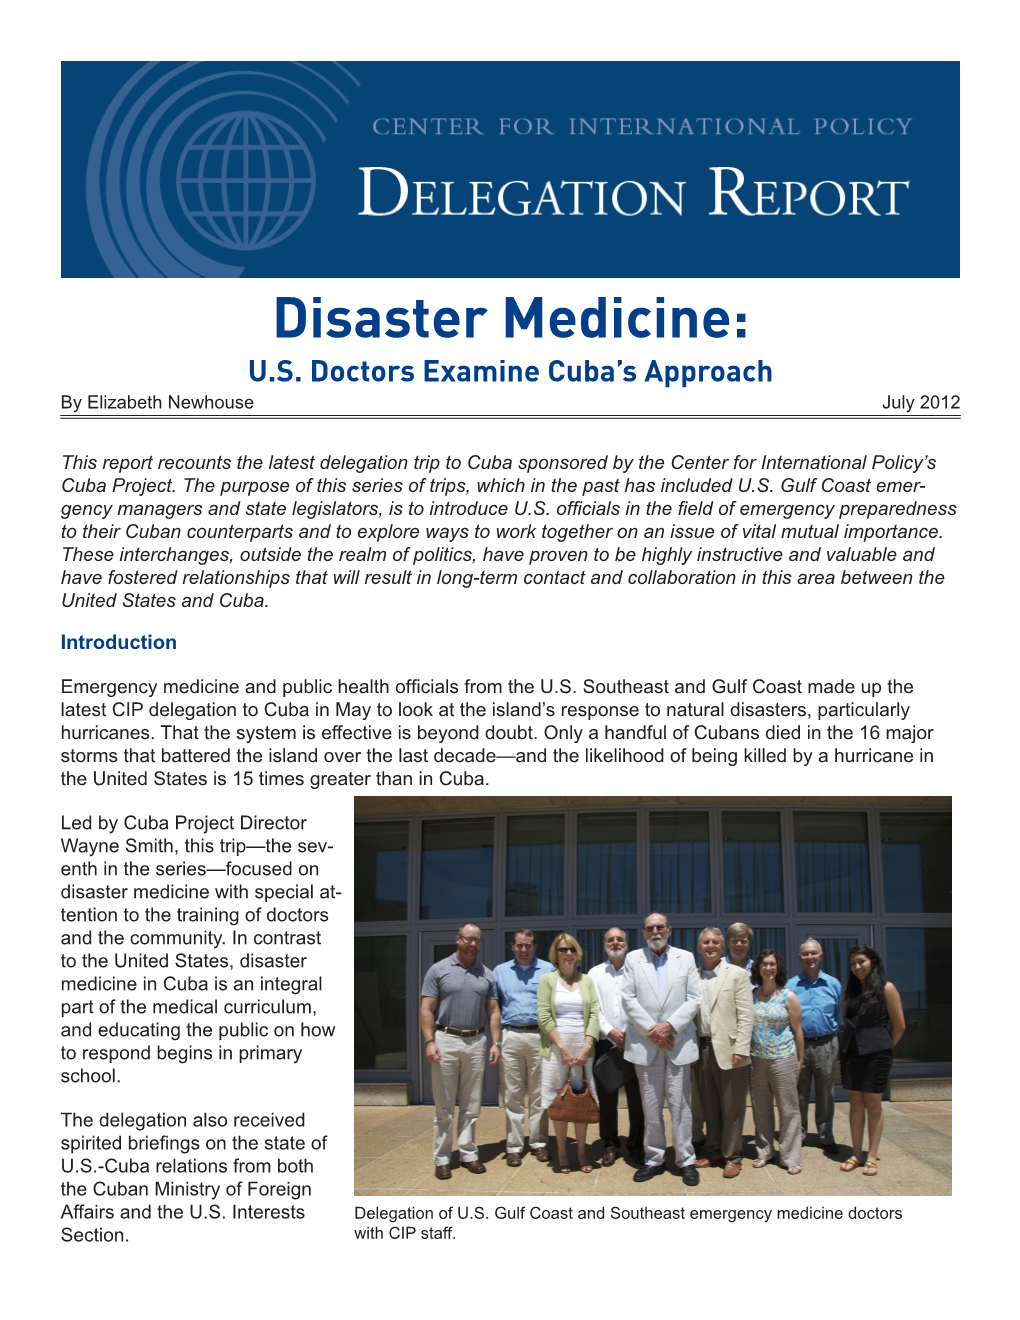 Disaster Medicine: U.S